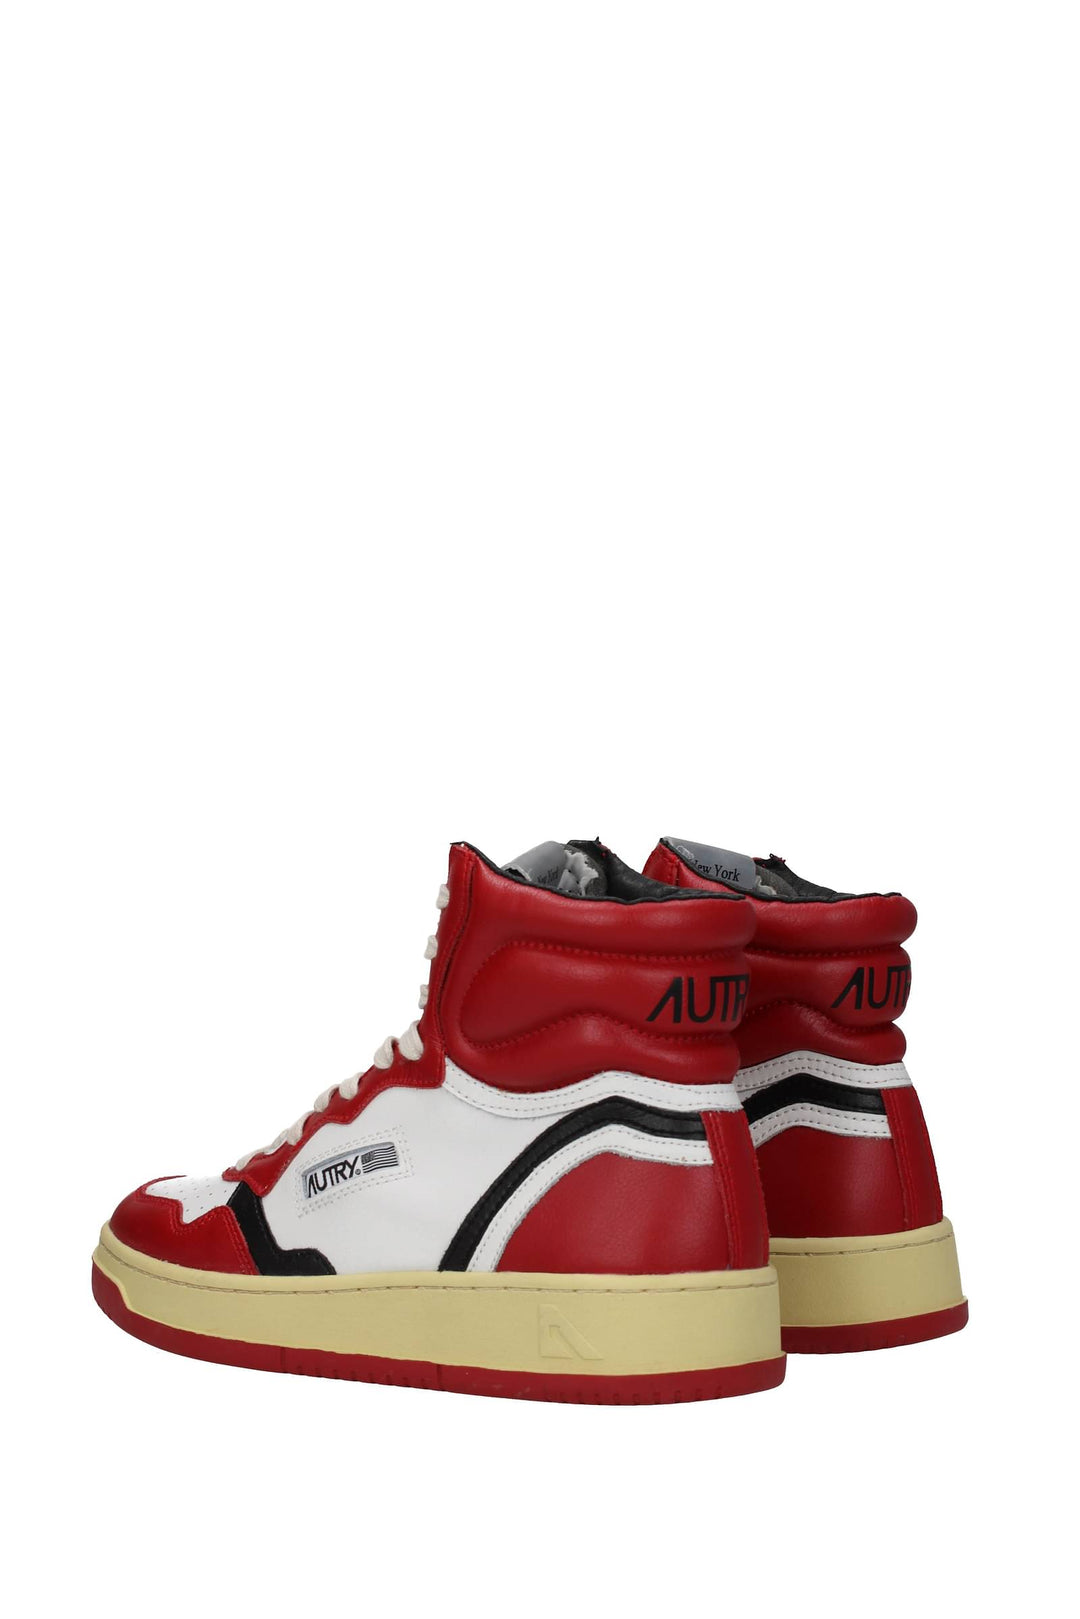 Sneakers Liberty Pelle Bianco Rosso - Autry - Uomo